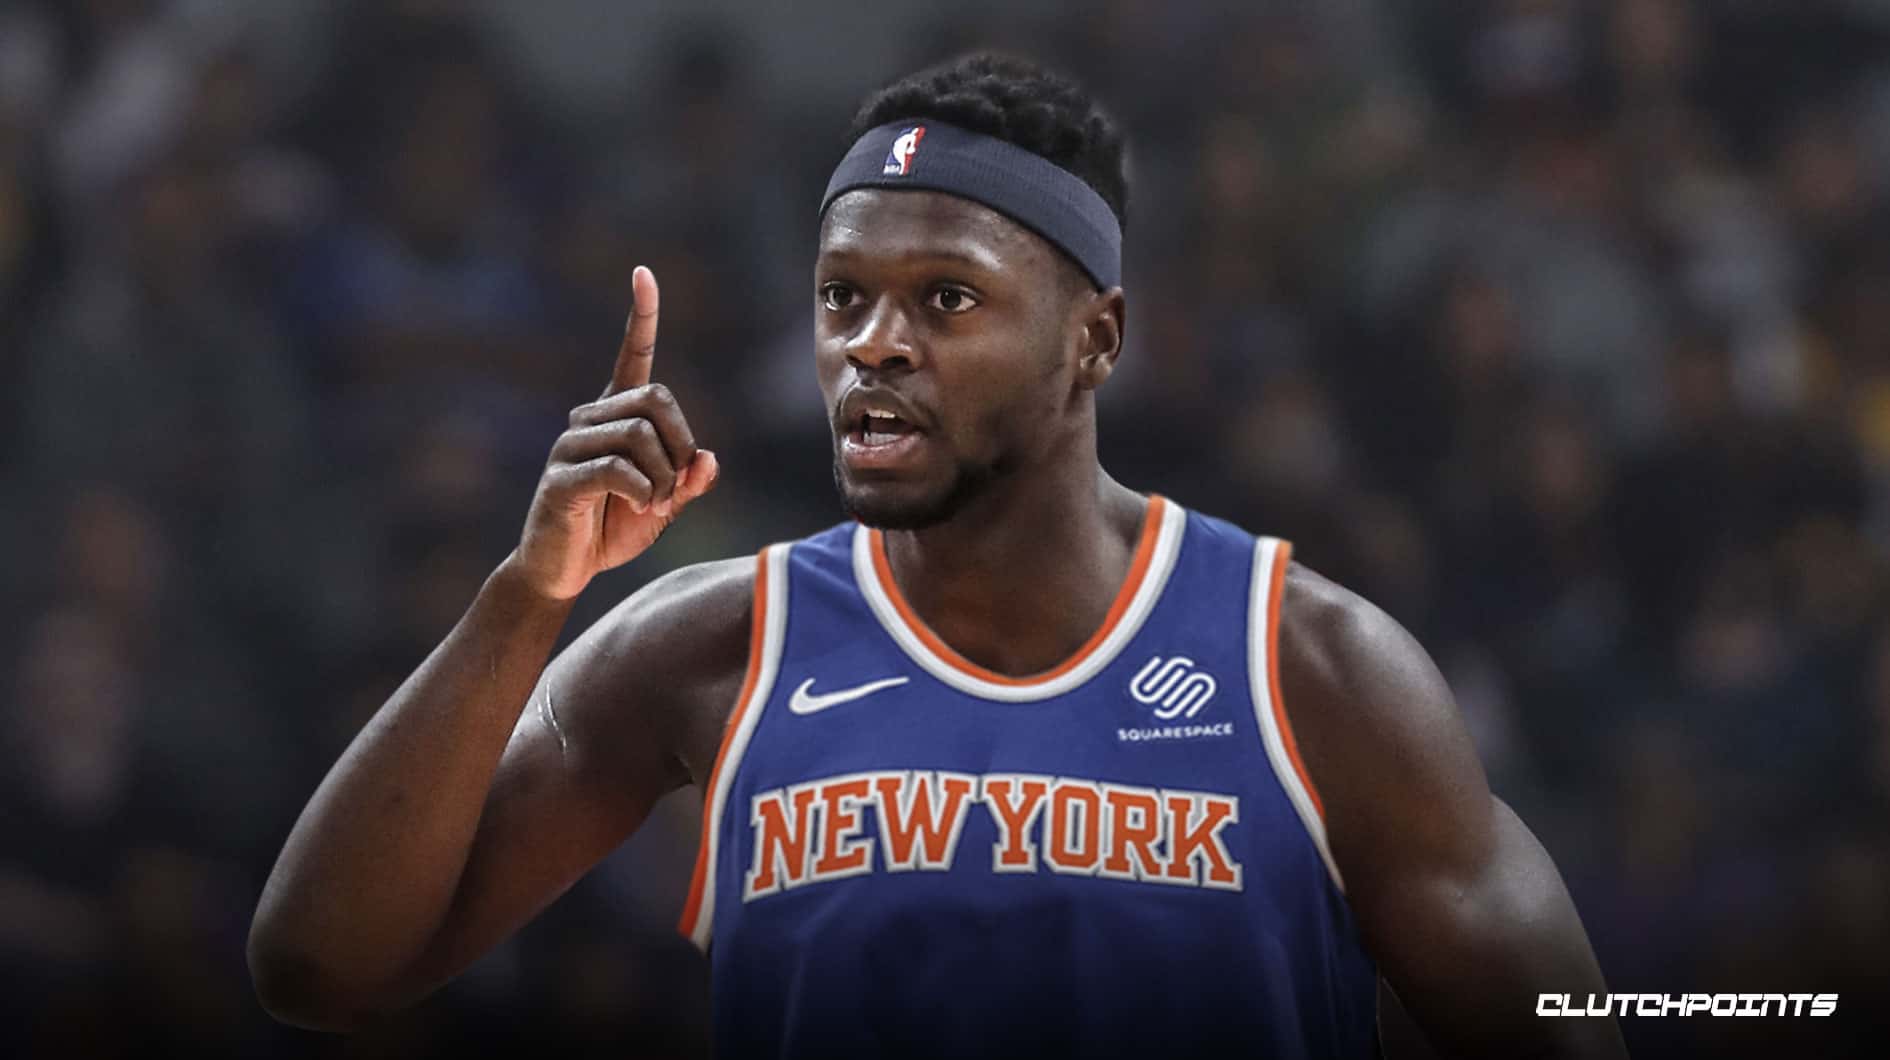 February 25th Kings at Knicks